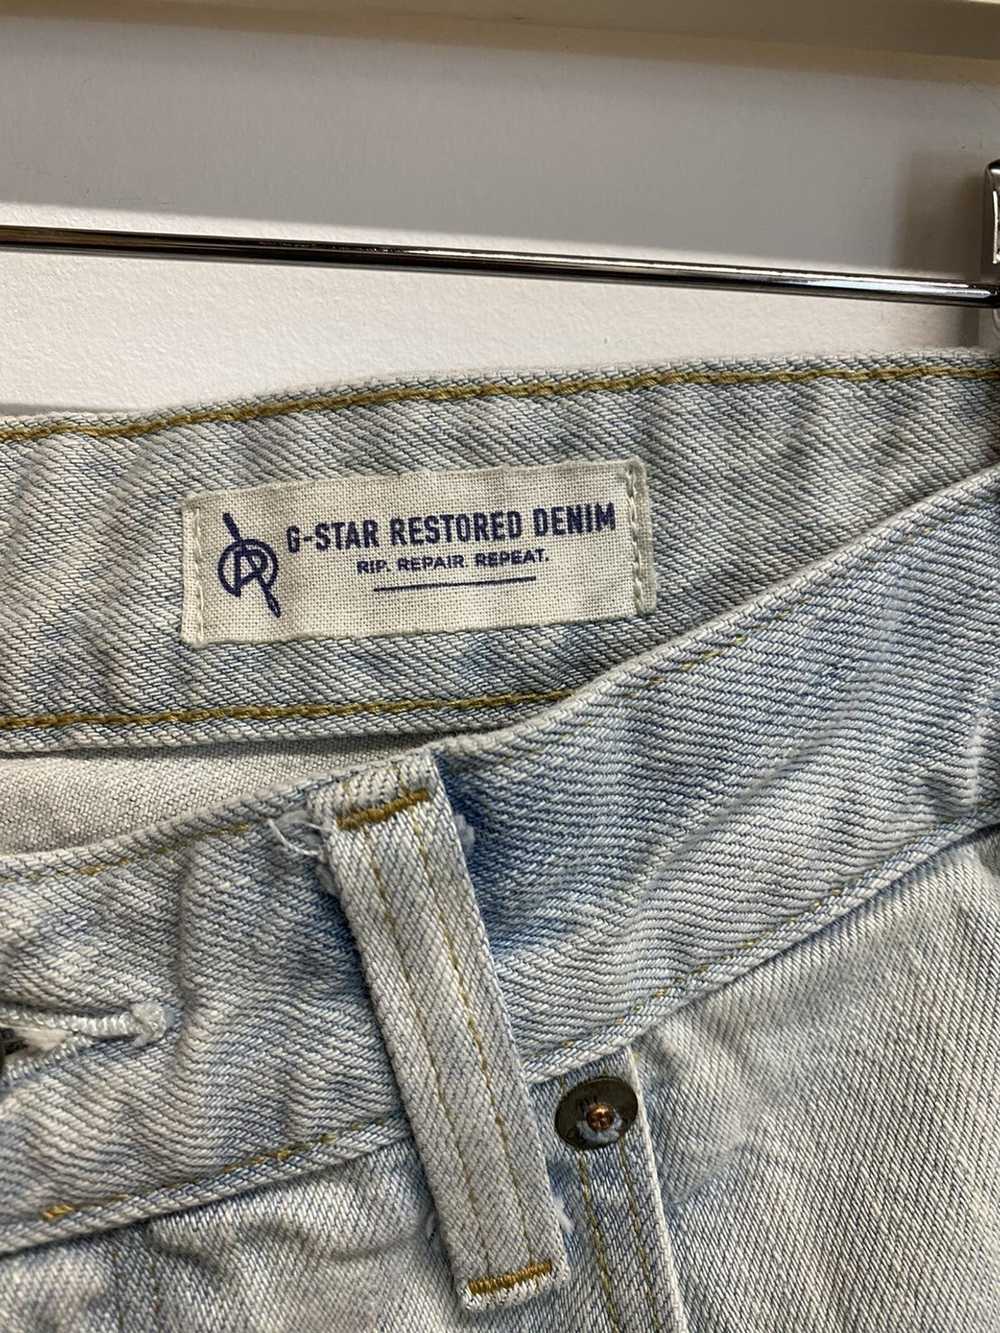 G Star Raw G star jeans - image 4